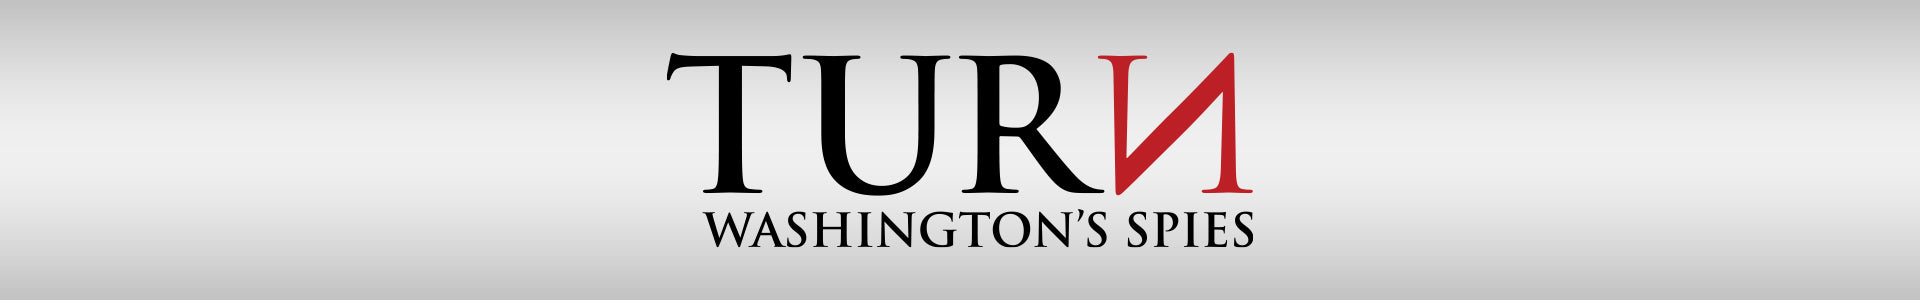 Turn: Washington's Spies